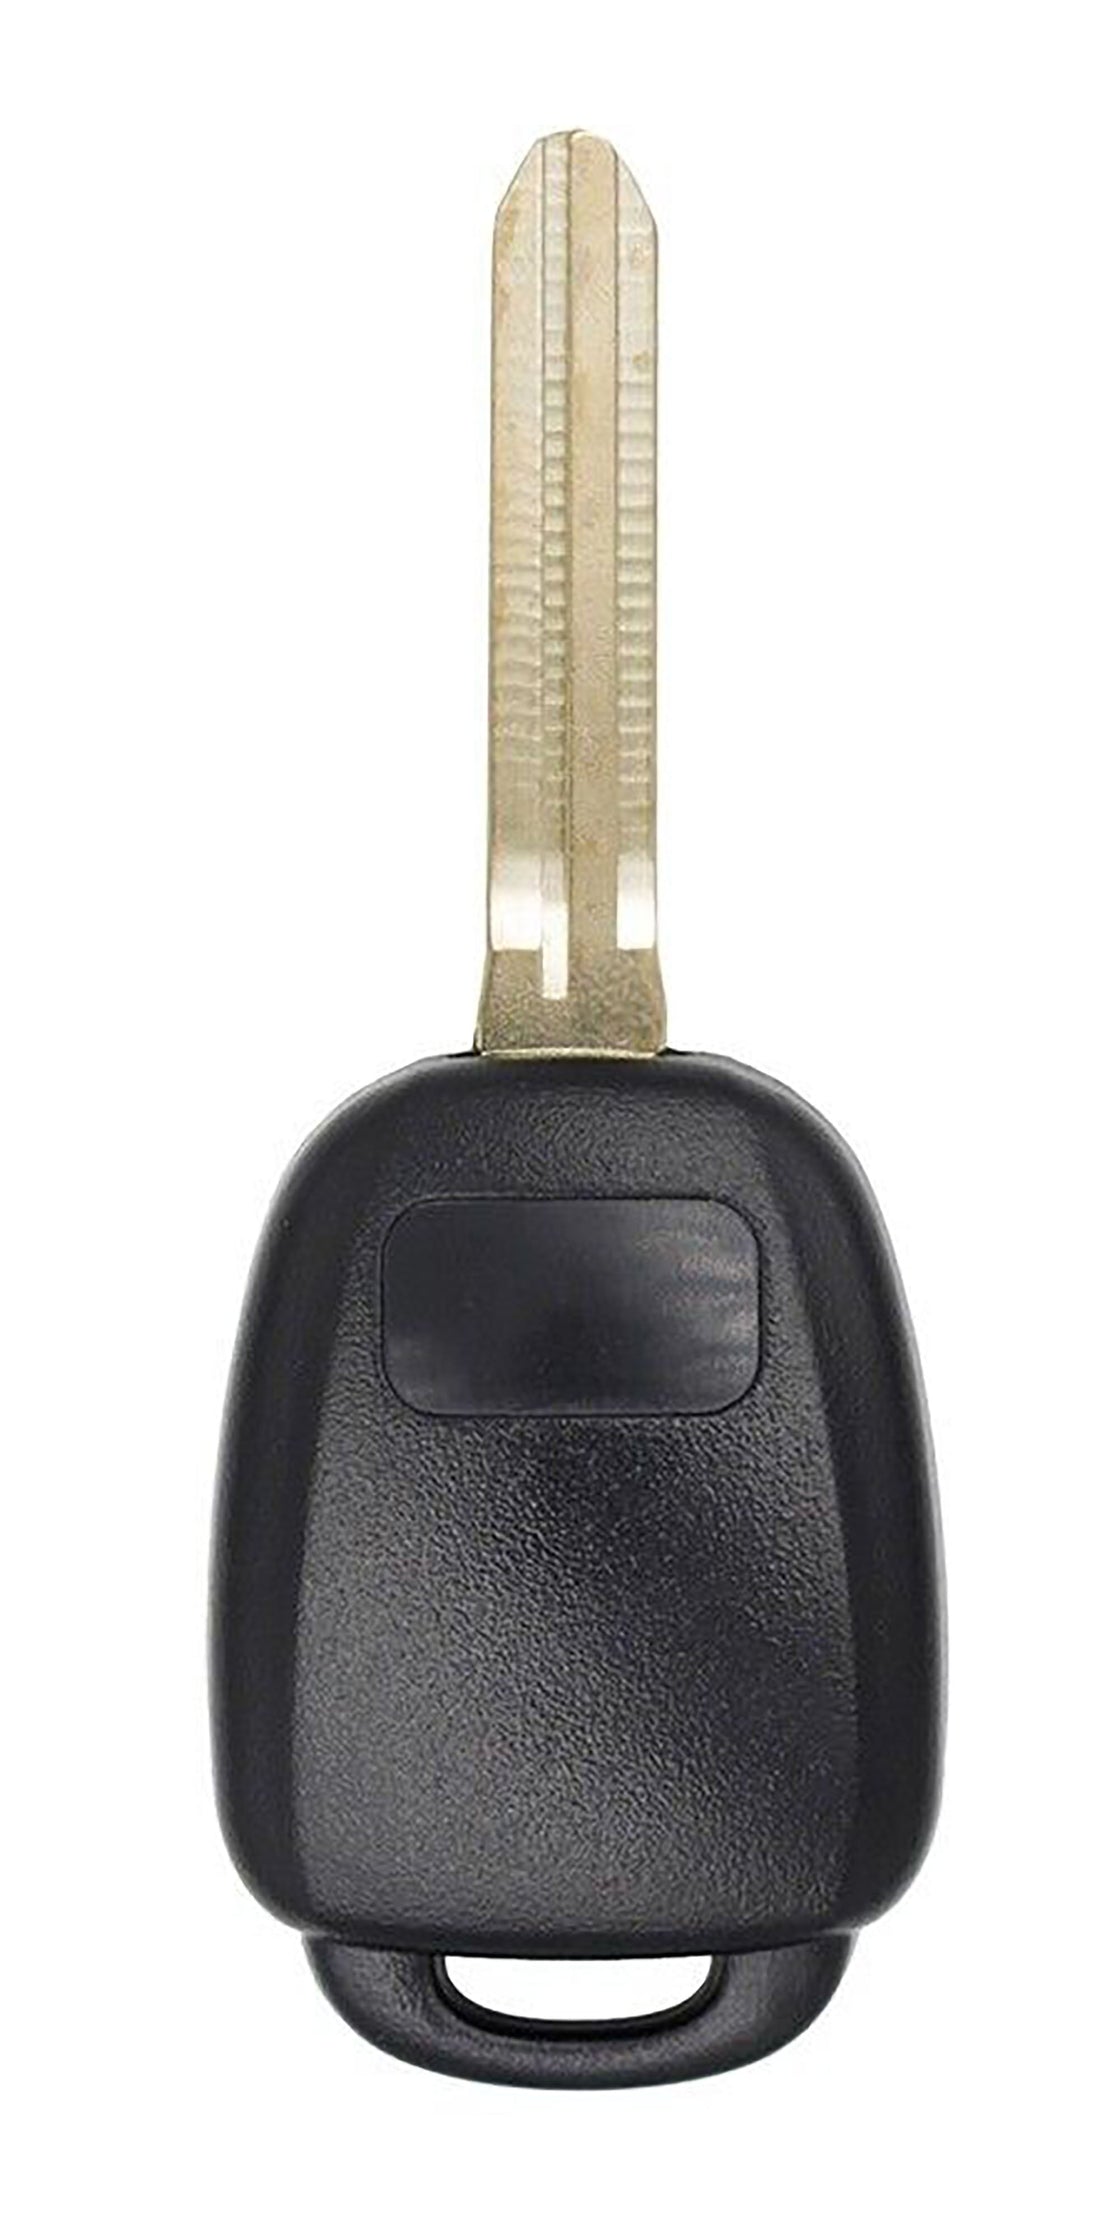 2016 Scion tC Replacement Key Fob Remote